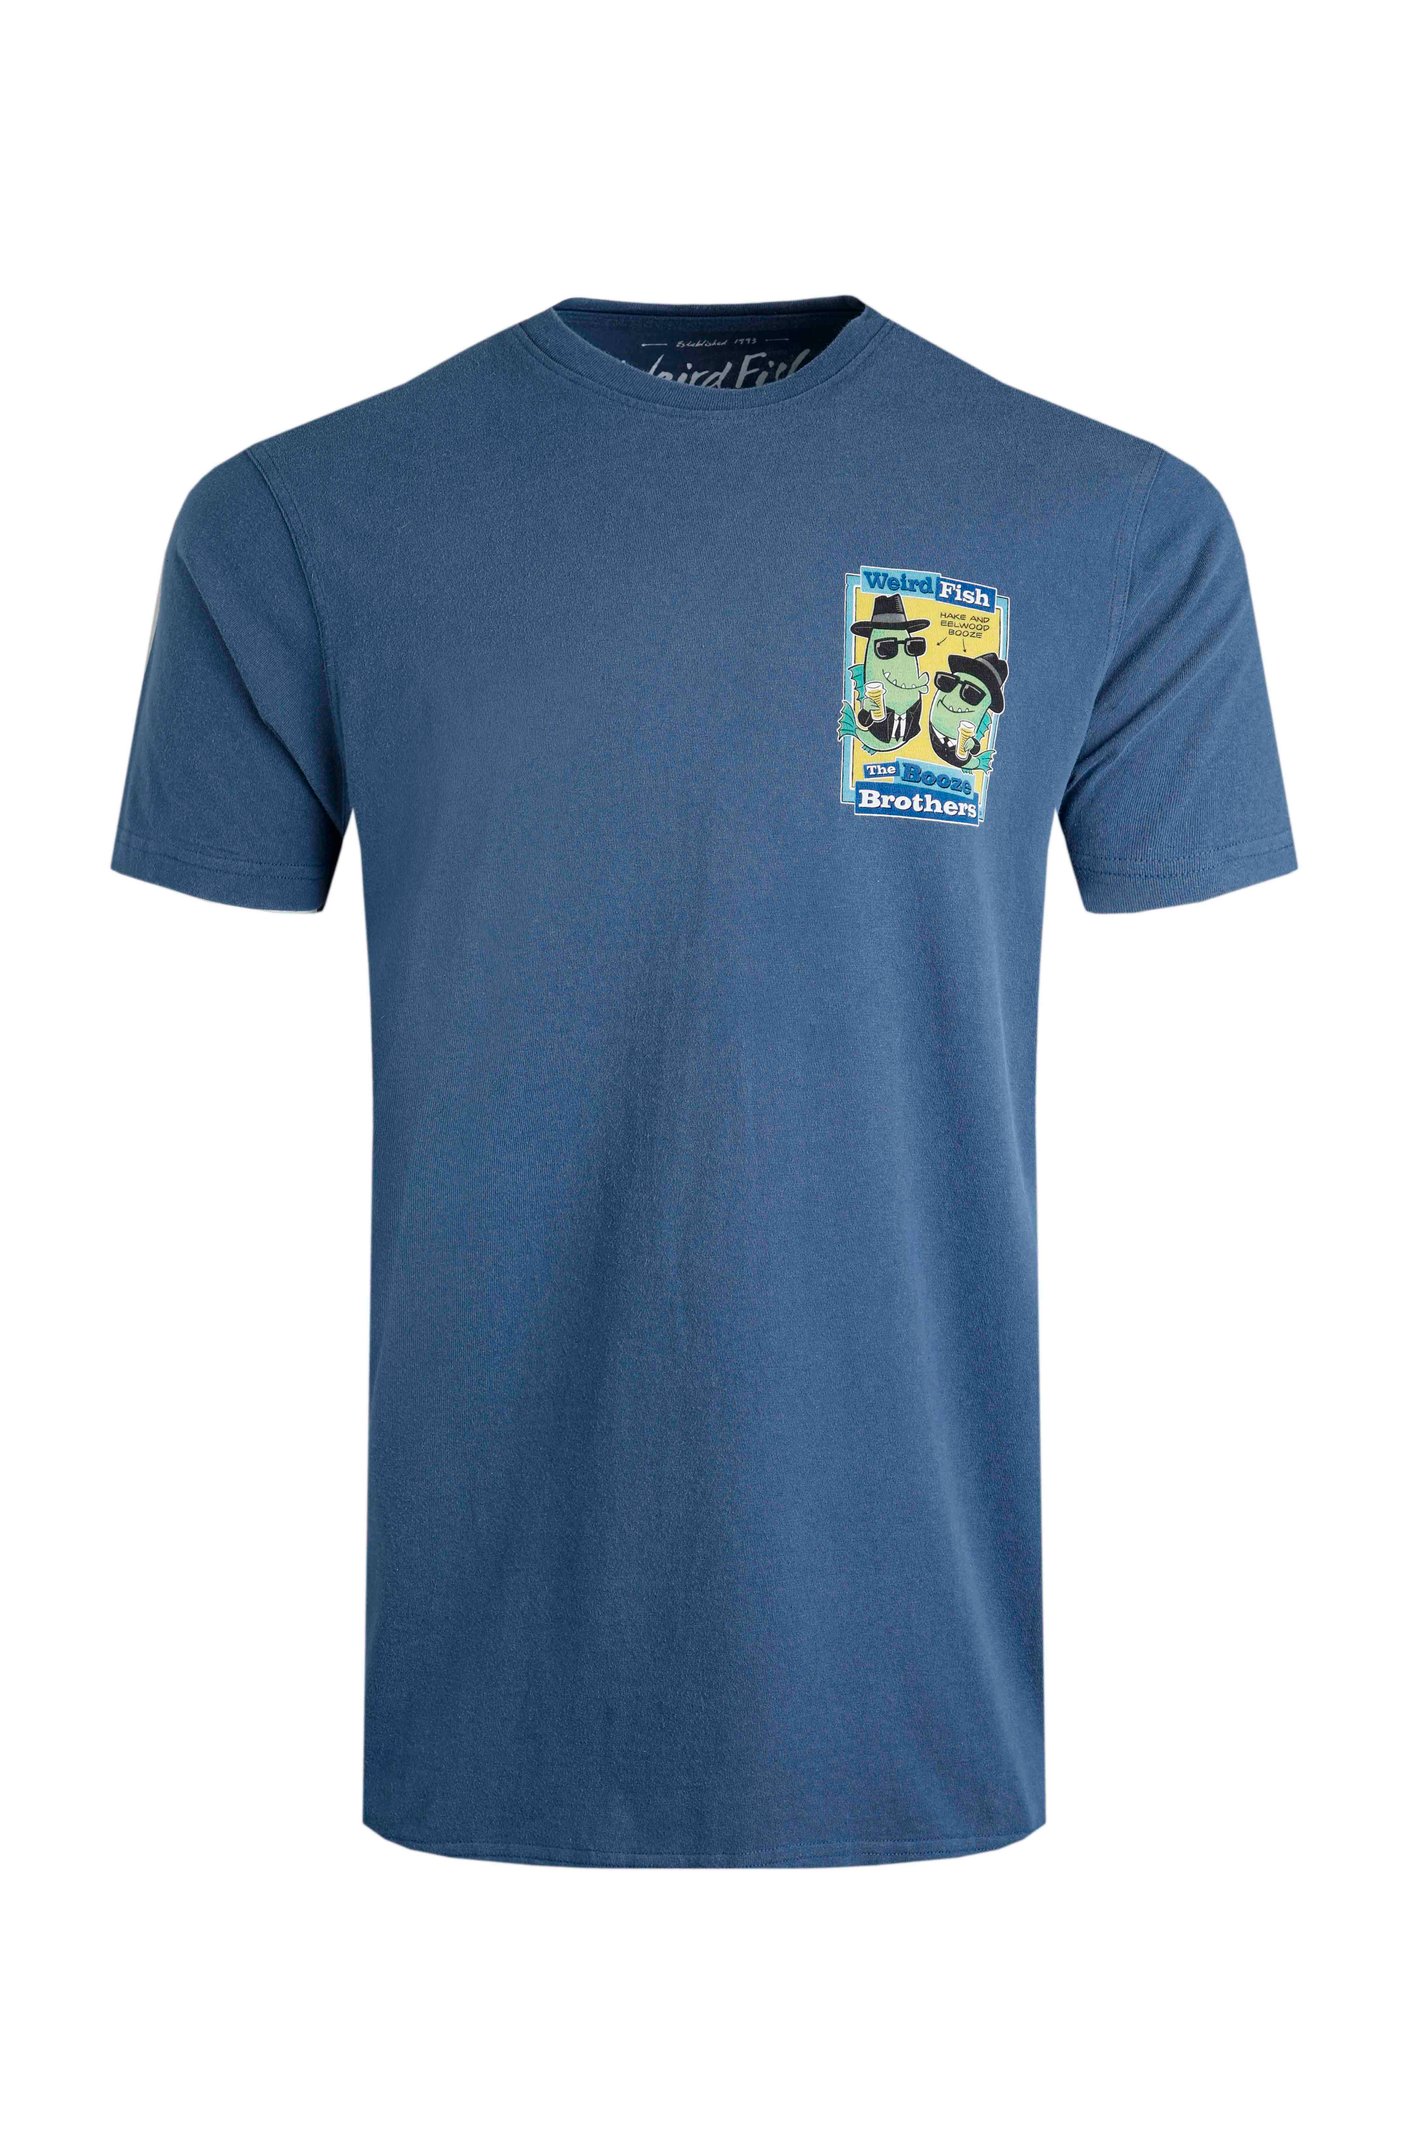 Weird Fish Booze Brothers Artist T-Shirt Ensign Blue Size L